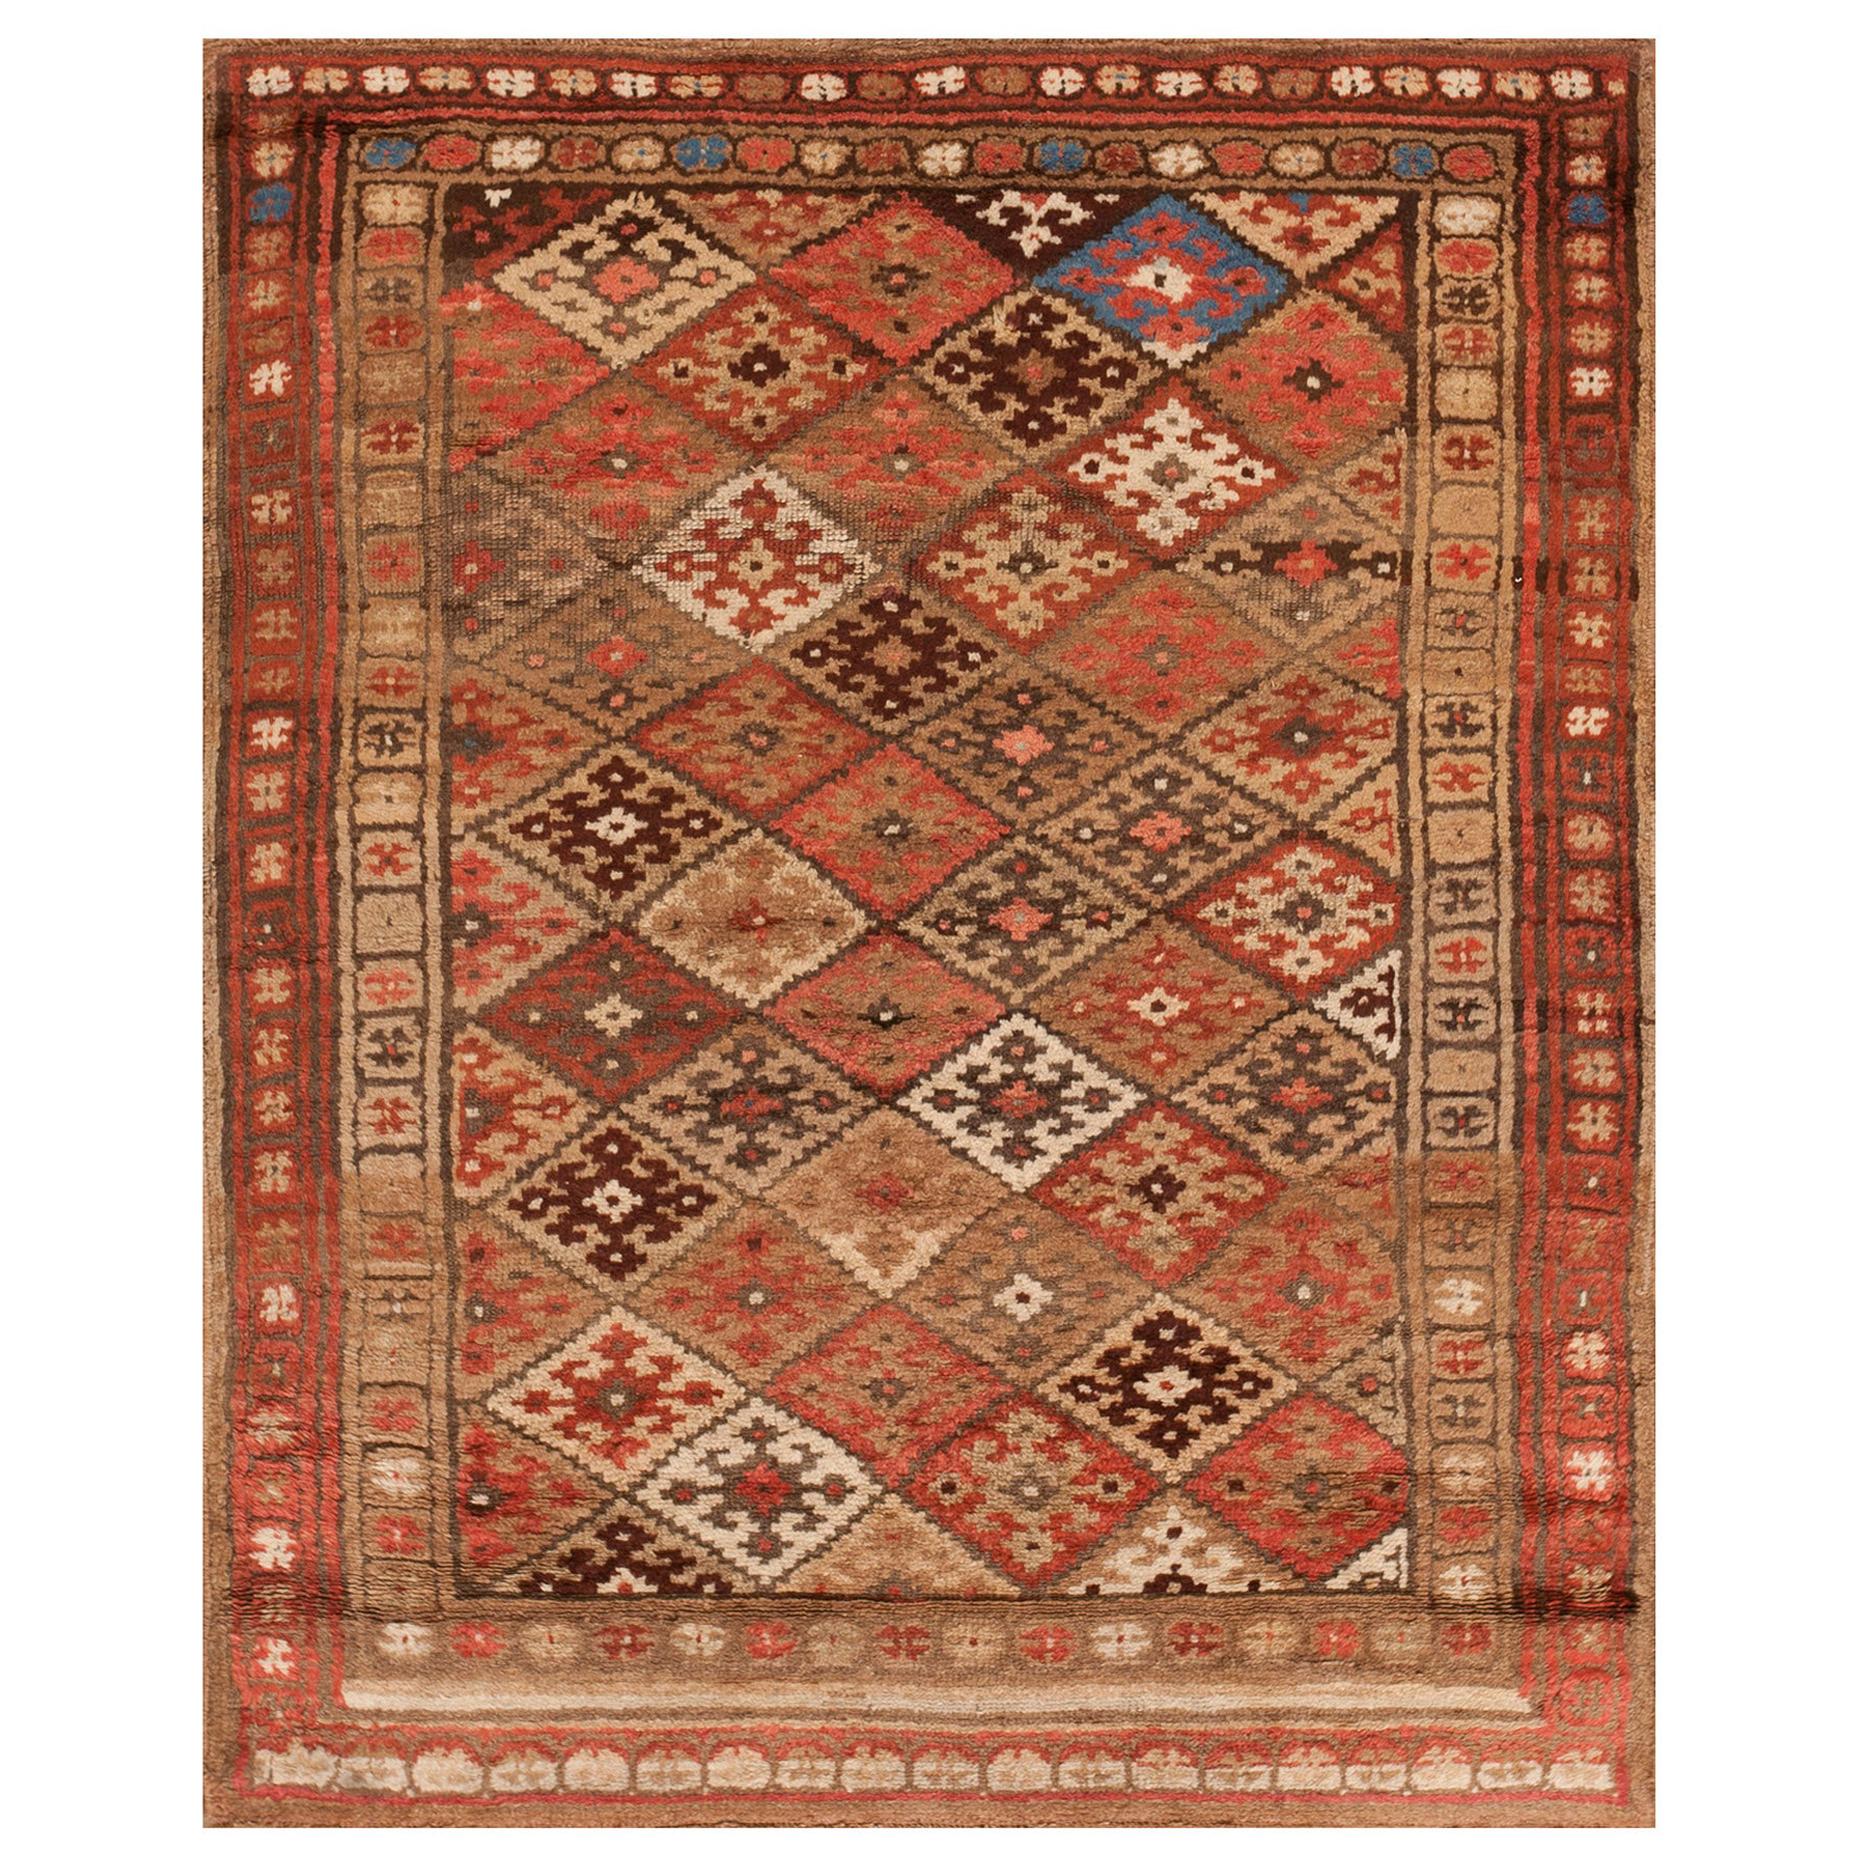 Early 20th Century W.  Persian Kurdish Carpet ( 4'6" x 5'4" - 137 x 163 )